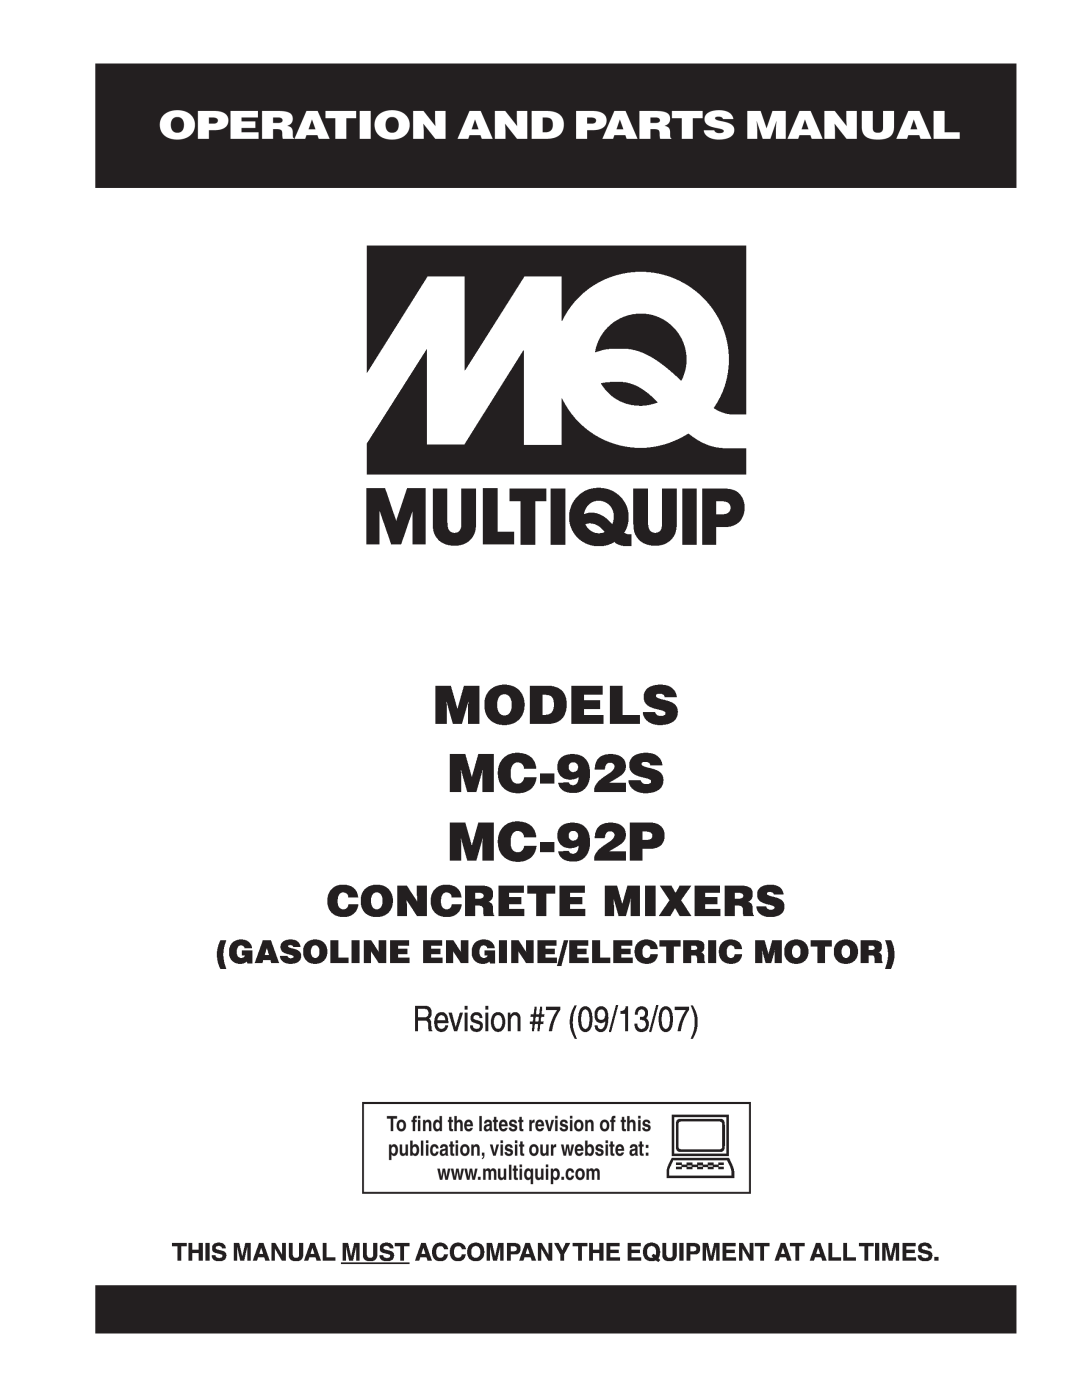 Multiquip manual Operation And Parts Manual, Gasoline Engine/Electric Motor, MODELS MC-92S MC-92P, Concrete Mixers 